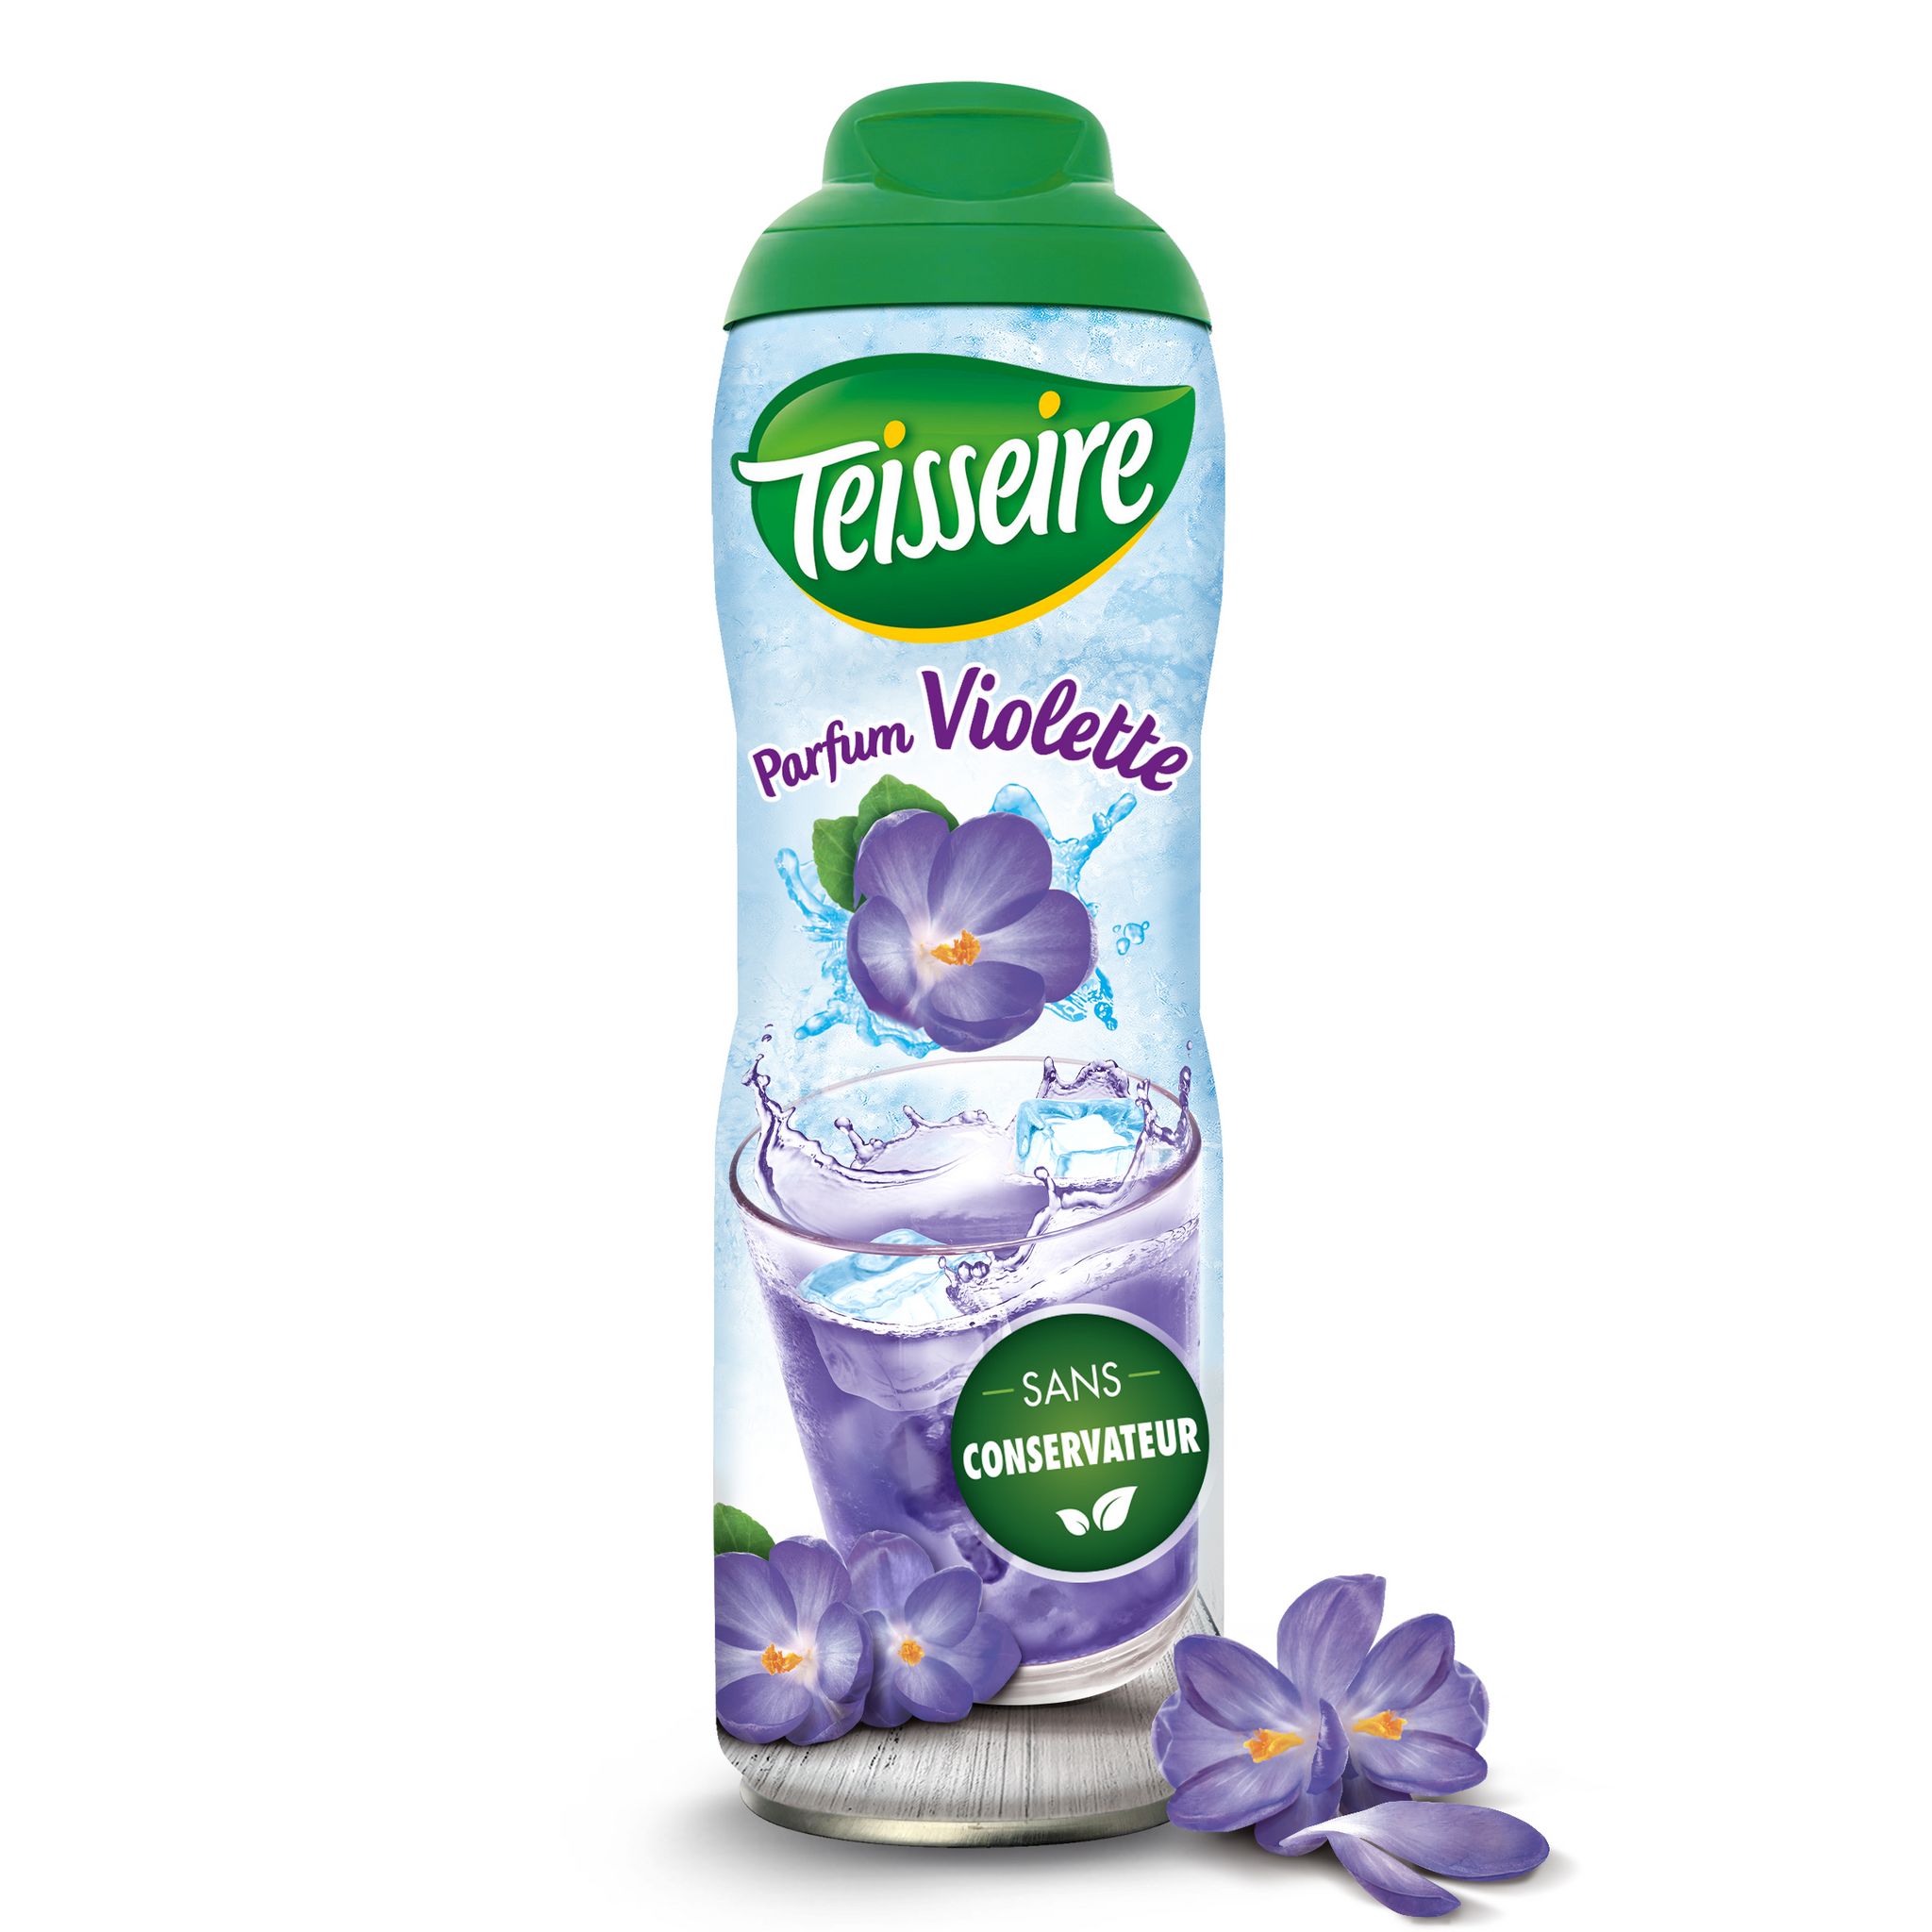 TEISSEIRE Sirop parfum violette bidon 60cl pas cher 